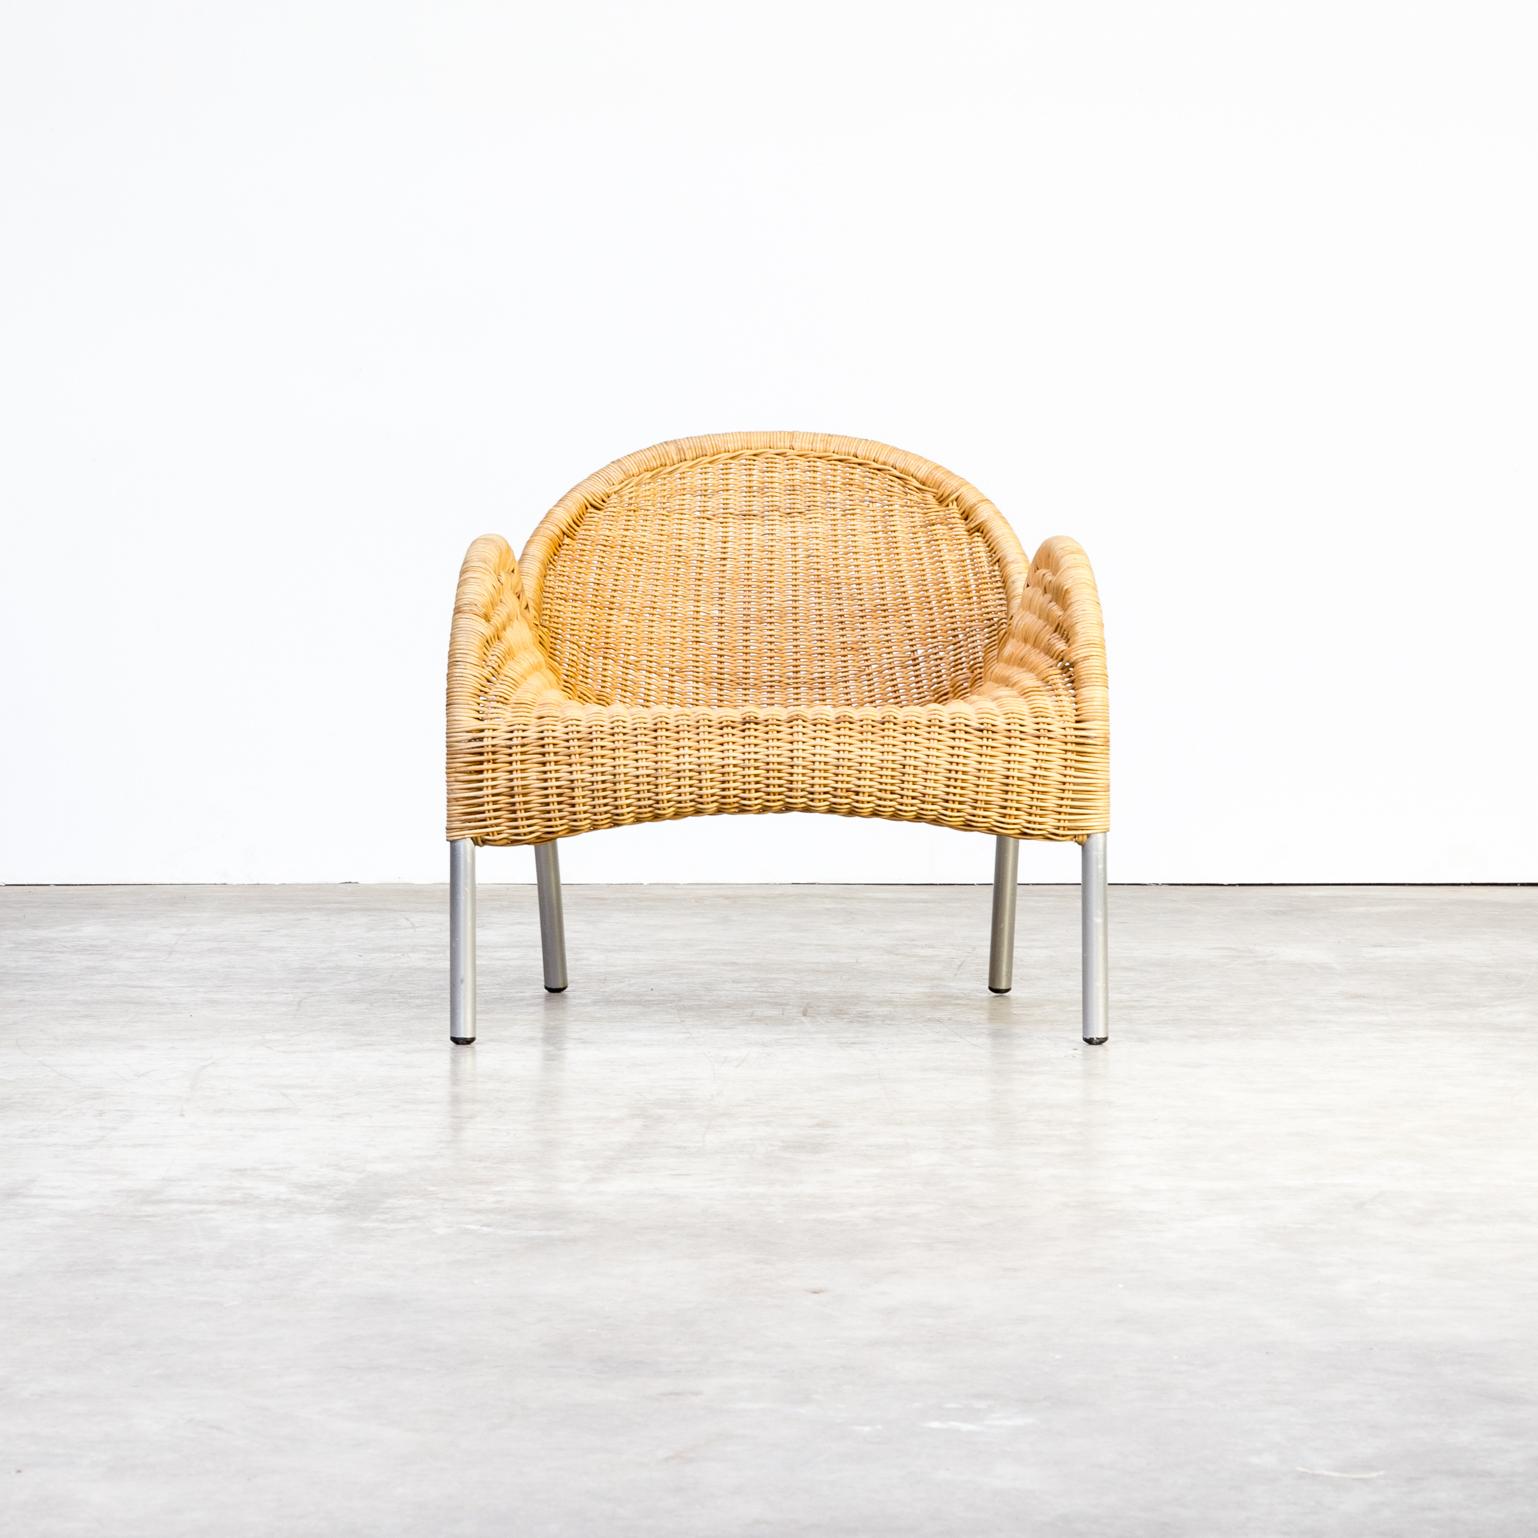 1990s Studio D’Umbino Lomazzi ‘manta’ fauteuil for Pierantonio Bonacina. Good condition consistent with age and use.